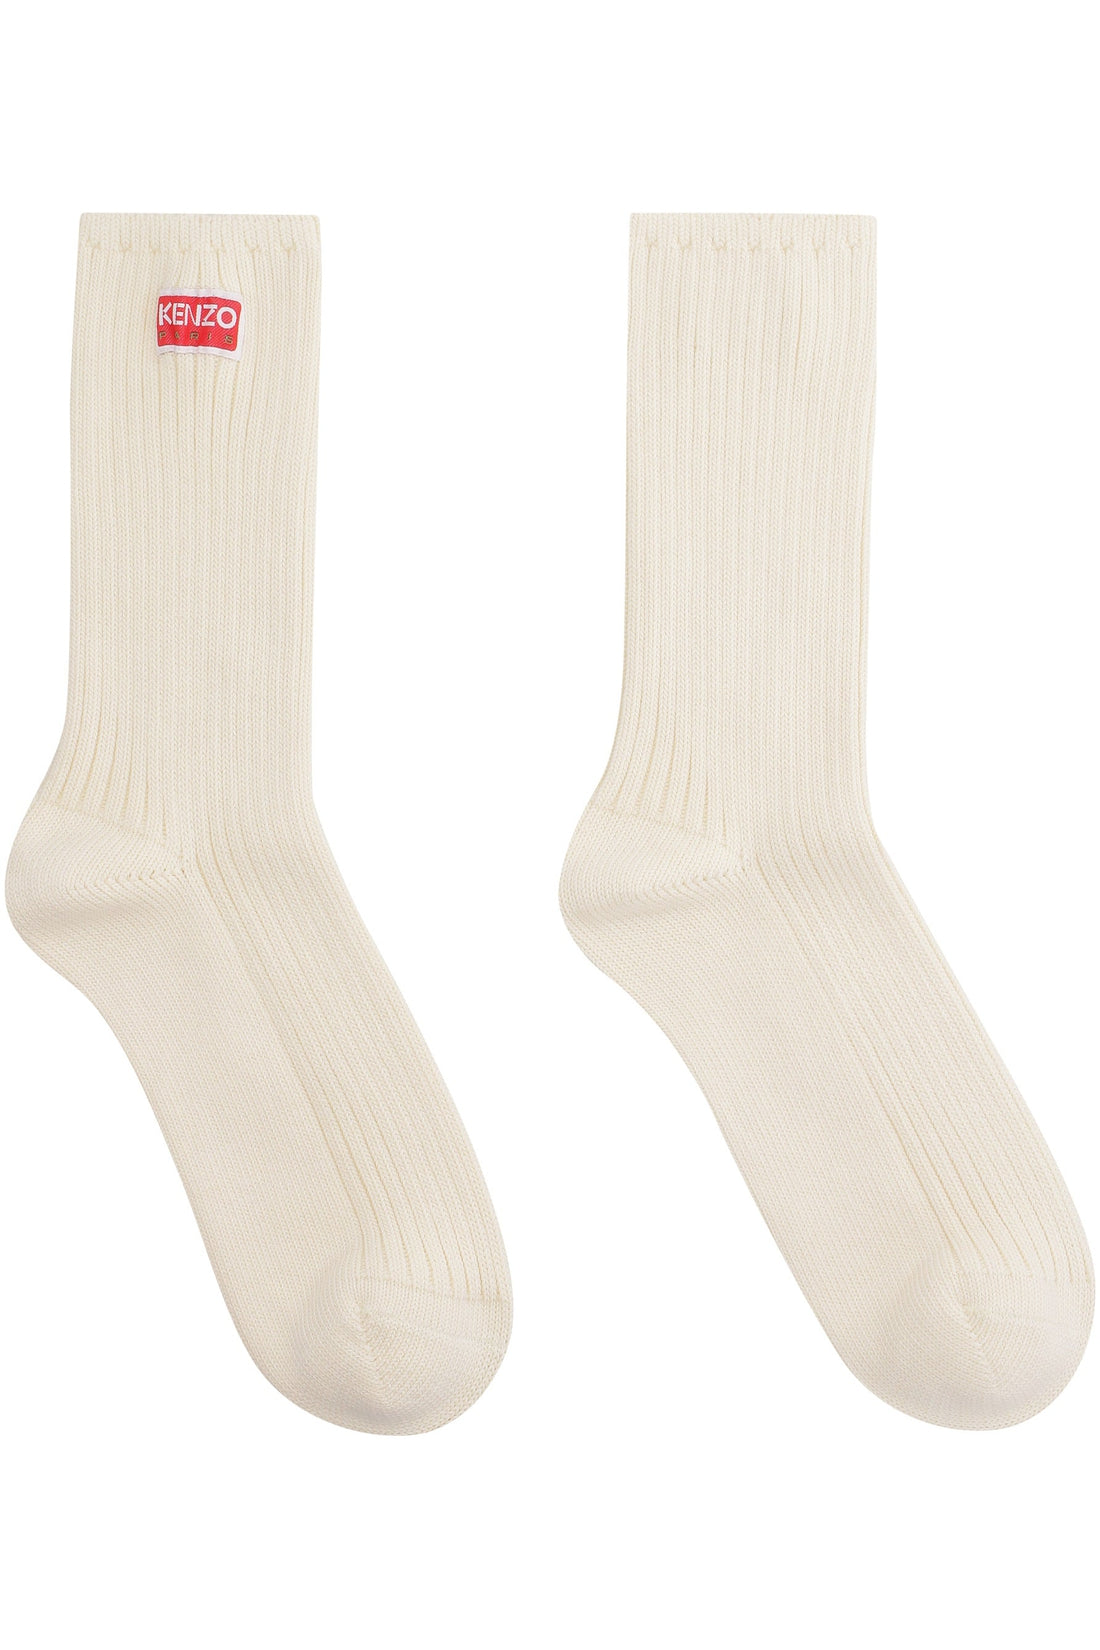 Kenzo-OUTLET-SALE-Logo cotton blend socks-ARCHIVIST